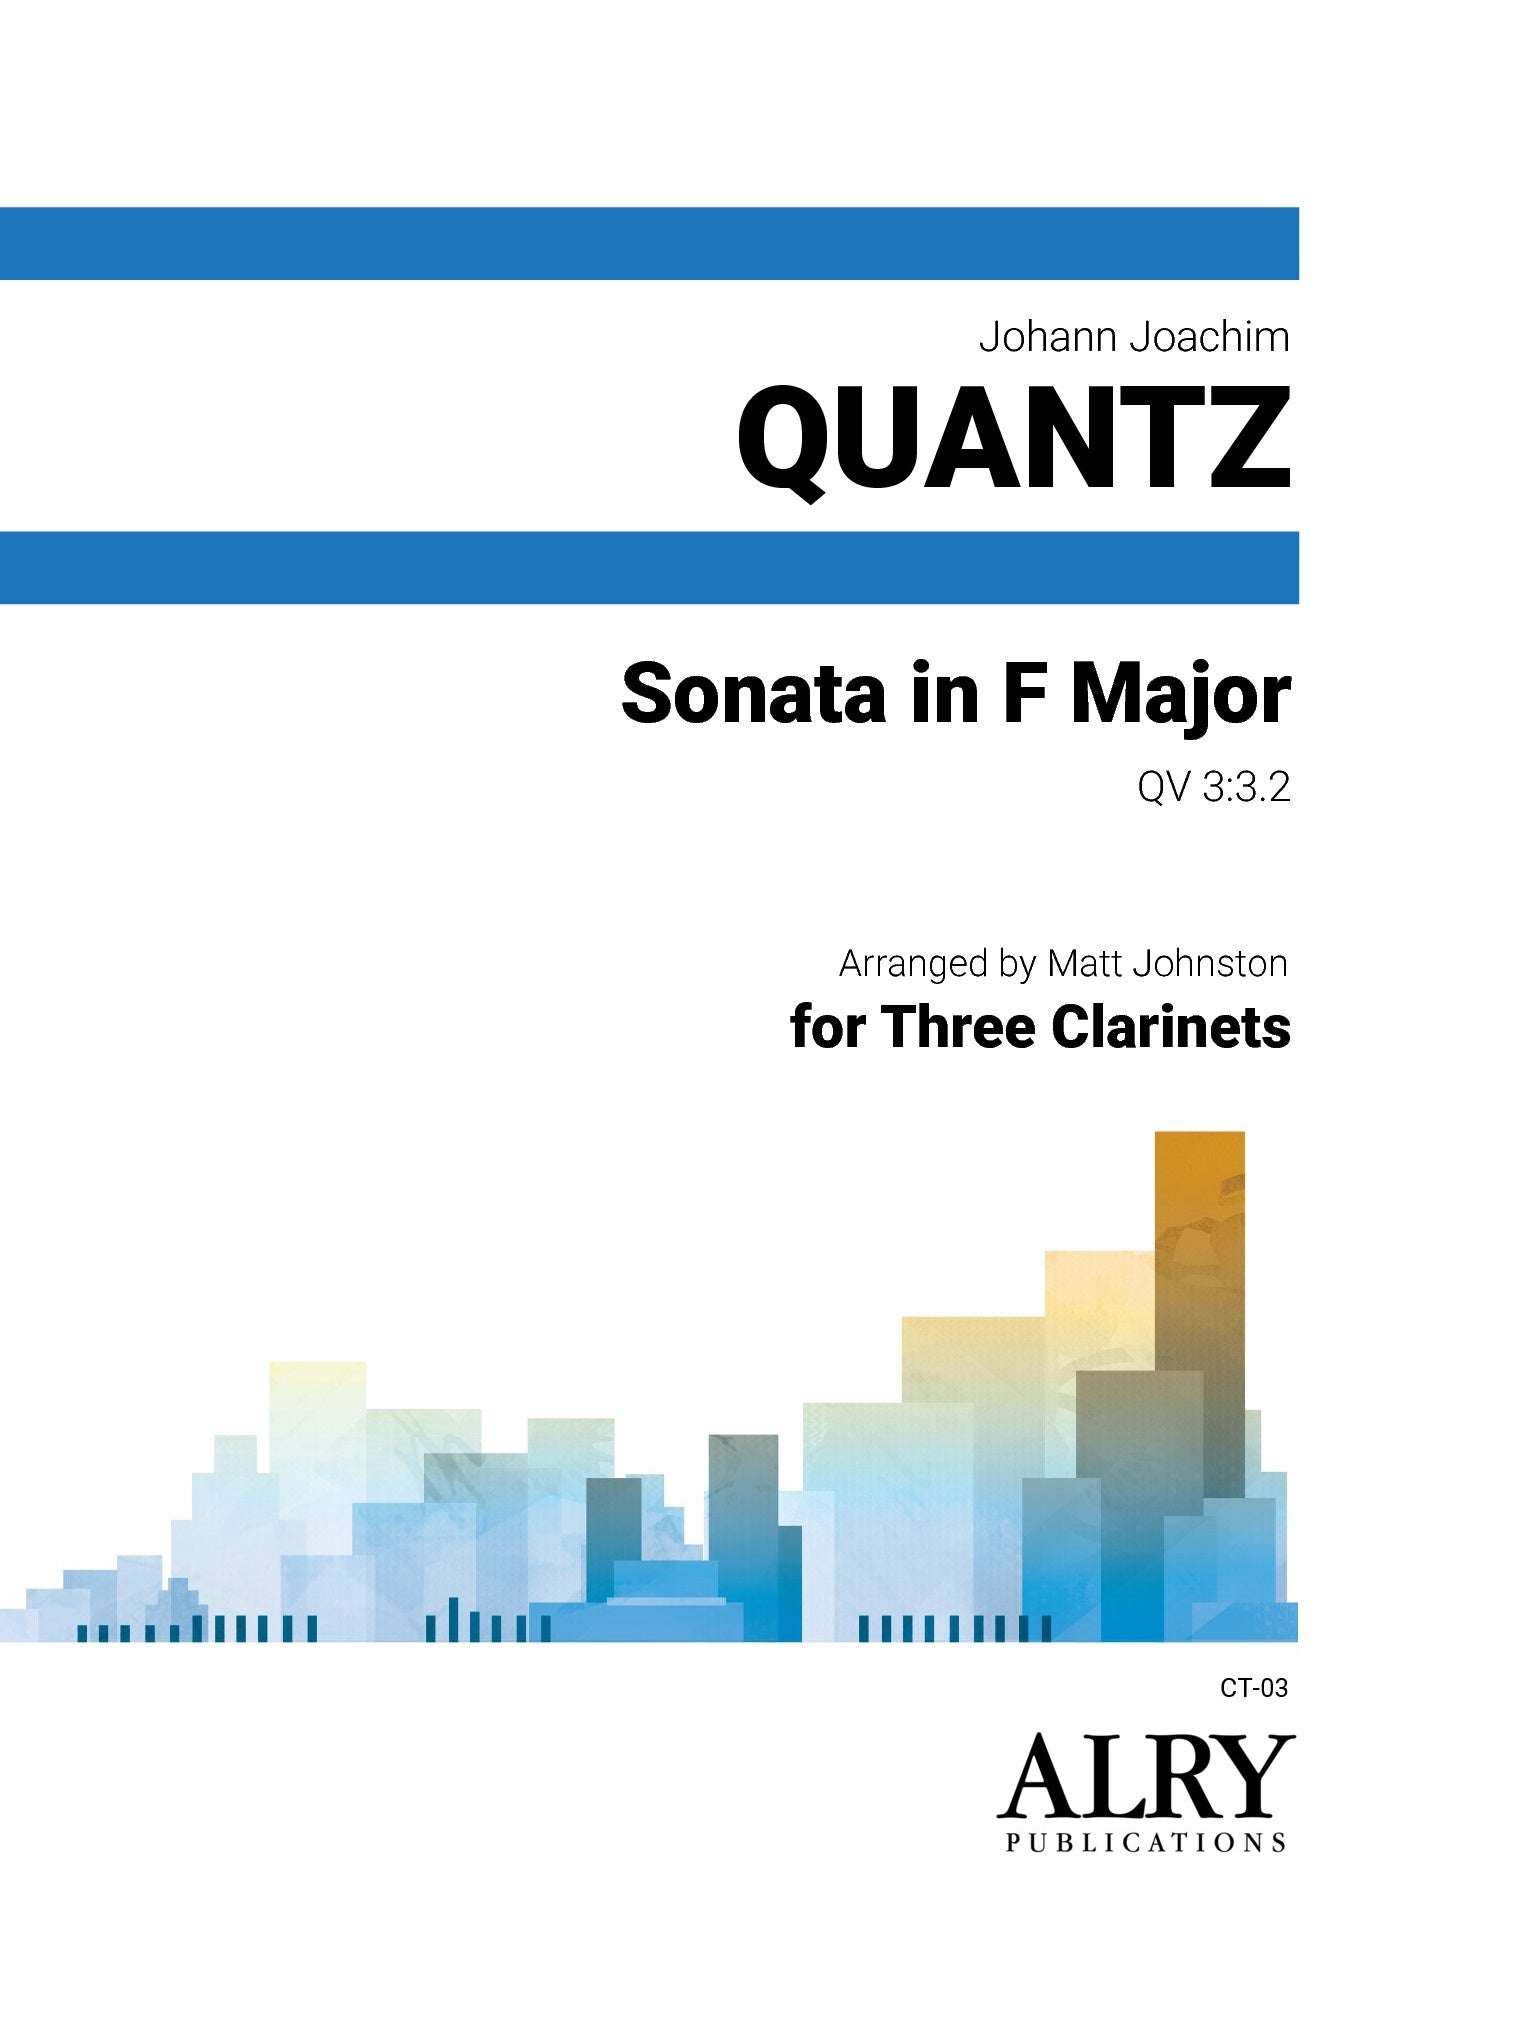 Quantz (arr. Matt Johnston) Sonata in F Major for Three Clarinets